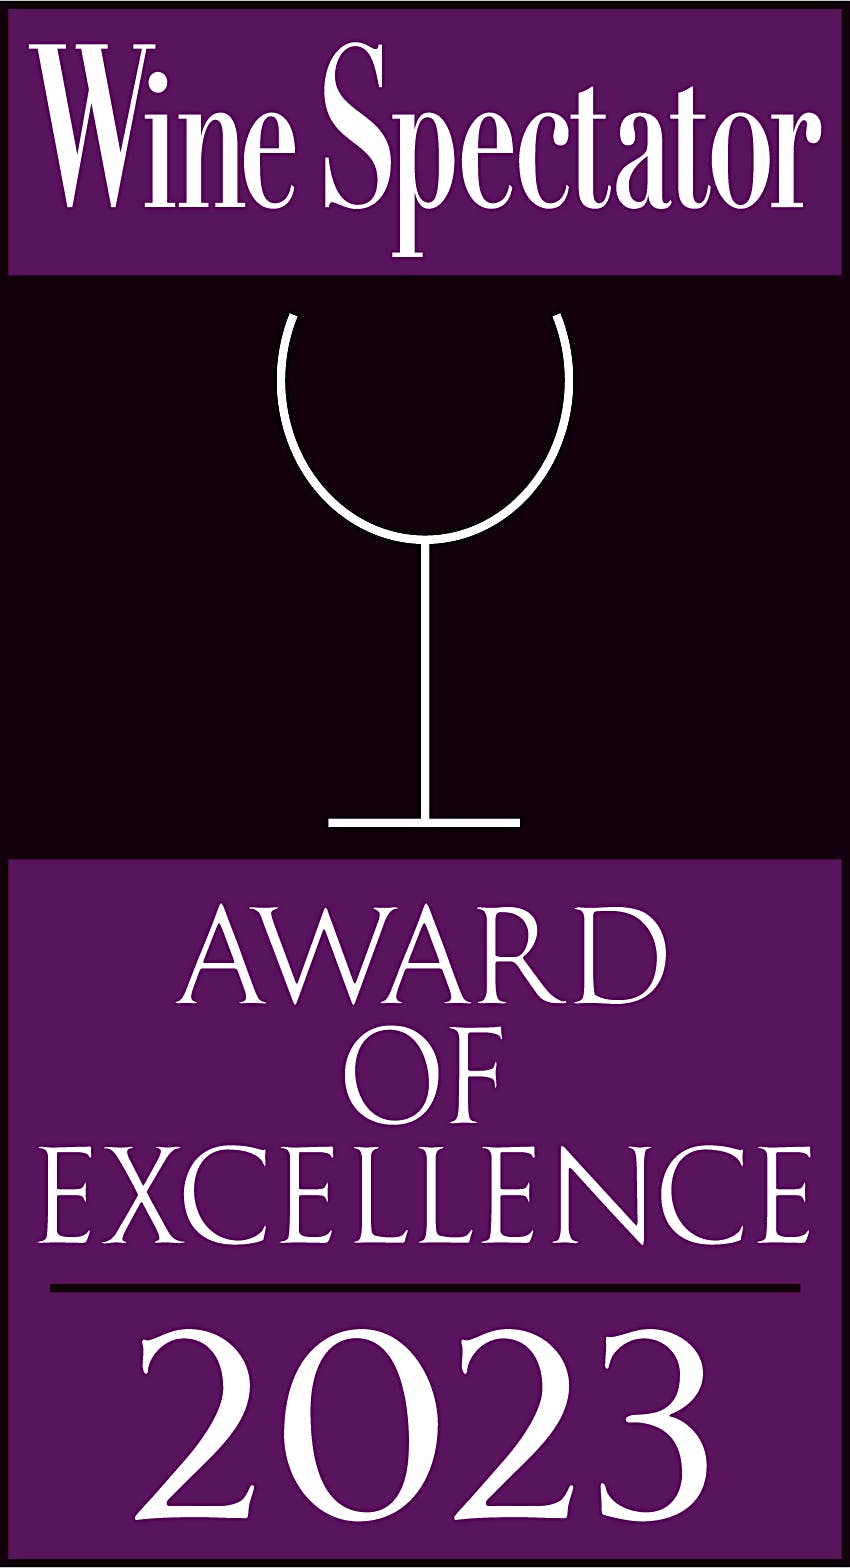 Wine Spectator Award of Excellence 2023 - Richter Tavern and Cork & Keg